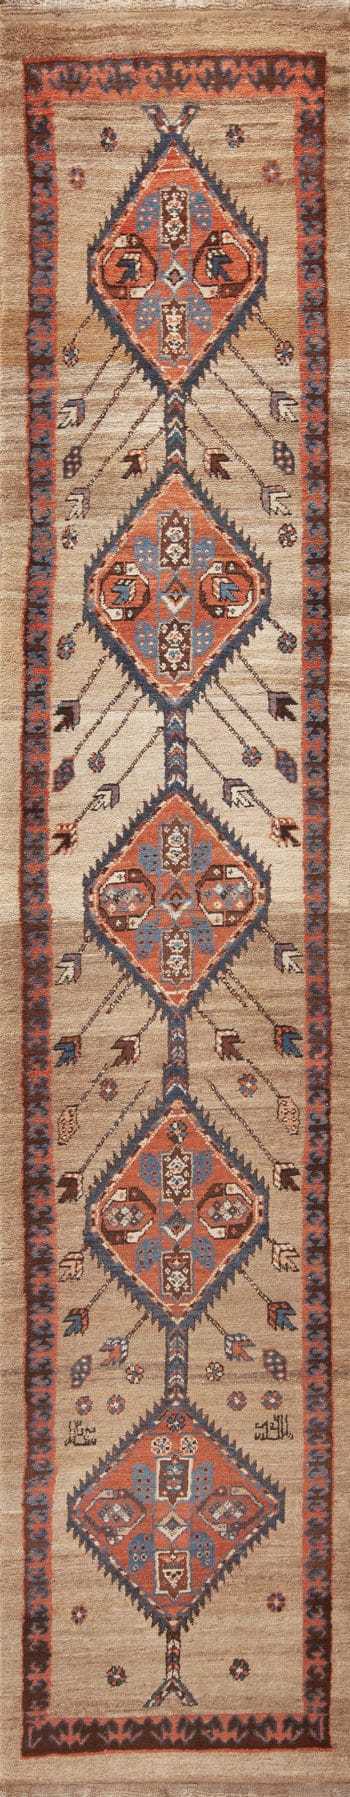 Tribal Antique Camel Hair Persian Bakshaish Hallway Runner Rug 72566 by Nazmiyal Antique Rugs